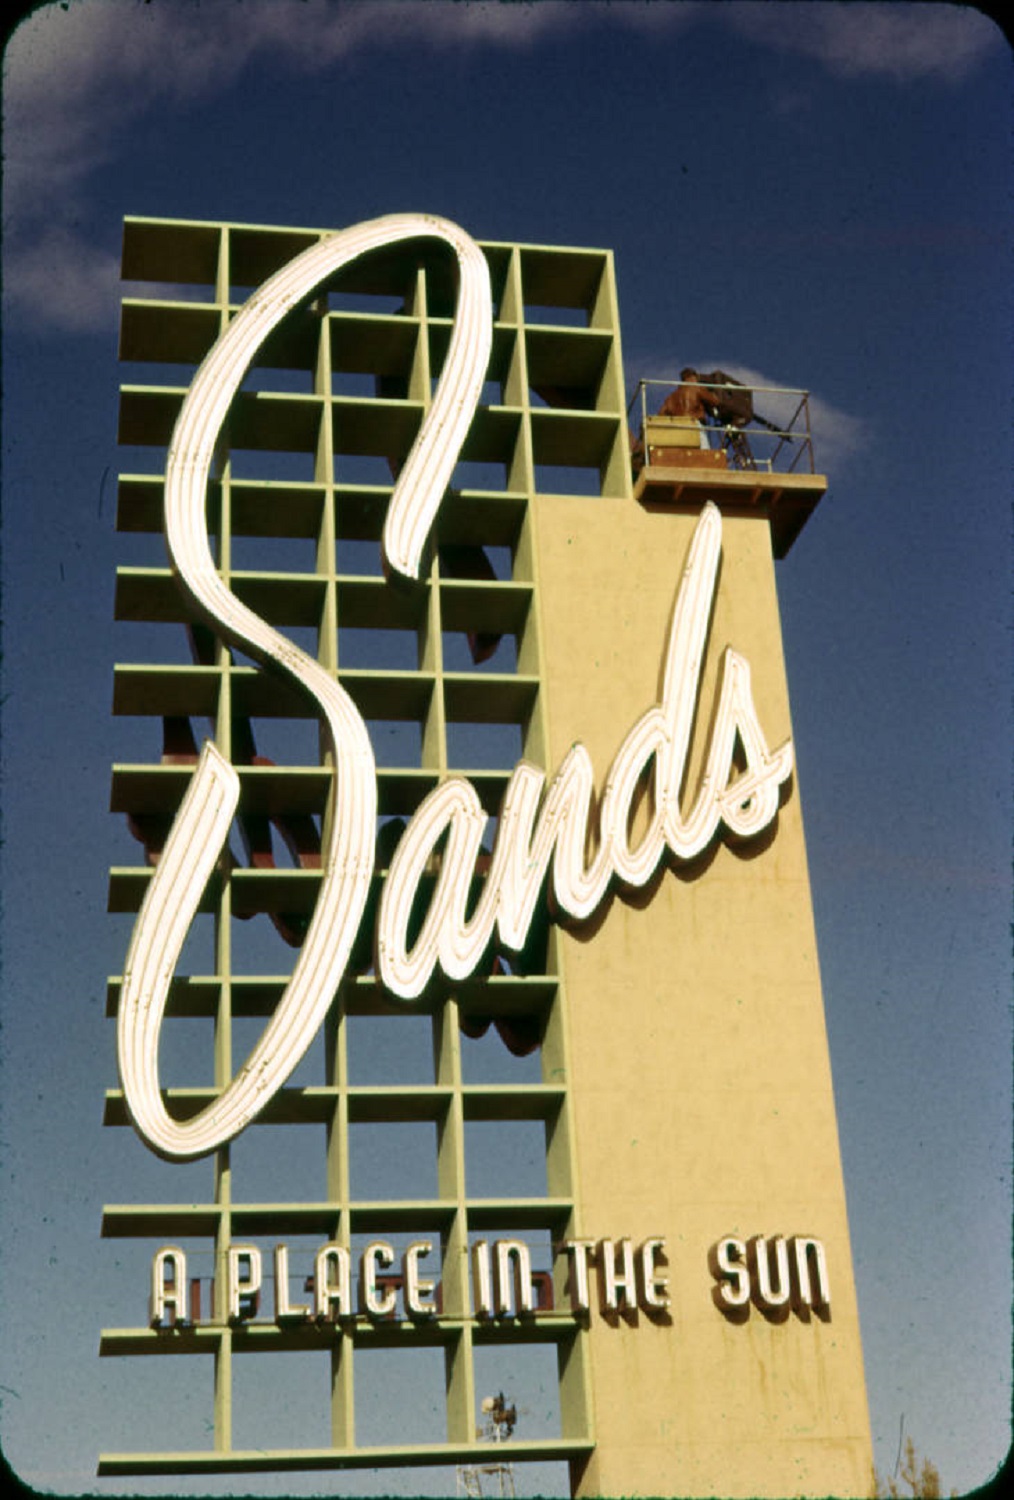 New Las Vegas Sands CEO Sets Plans Amid $1.69bn Loss